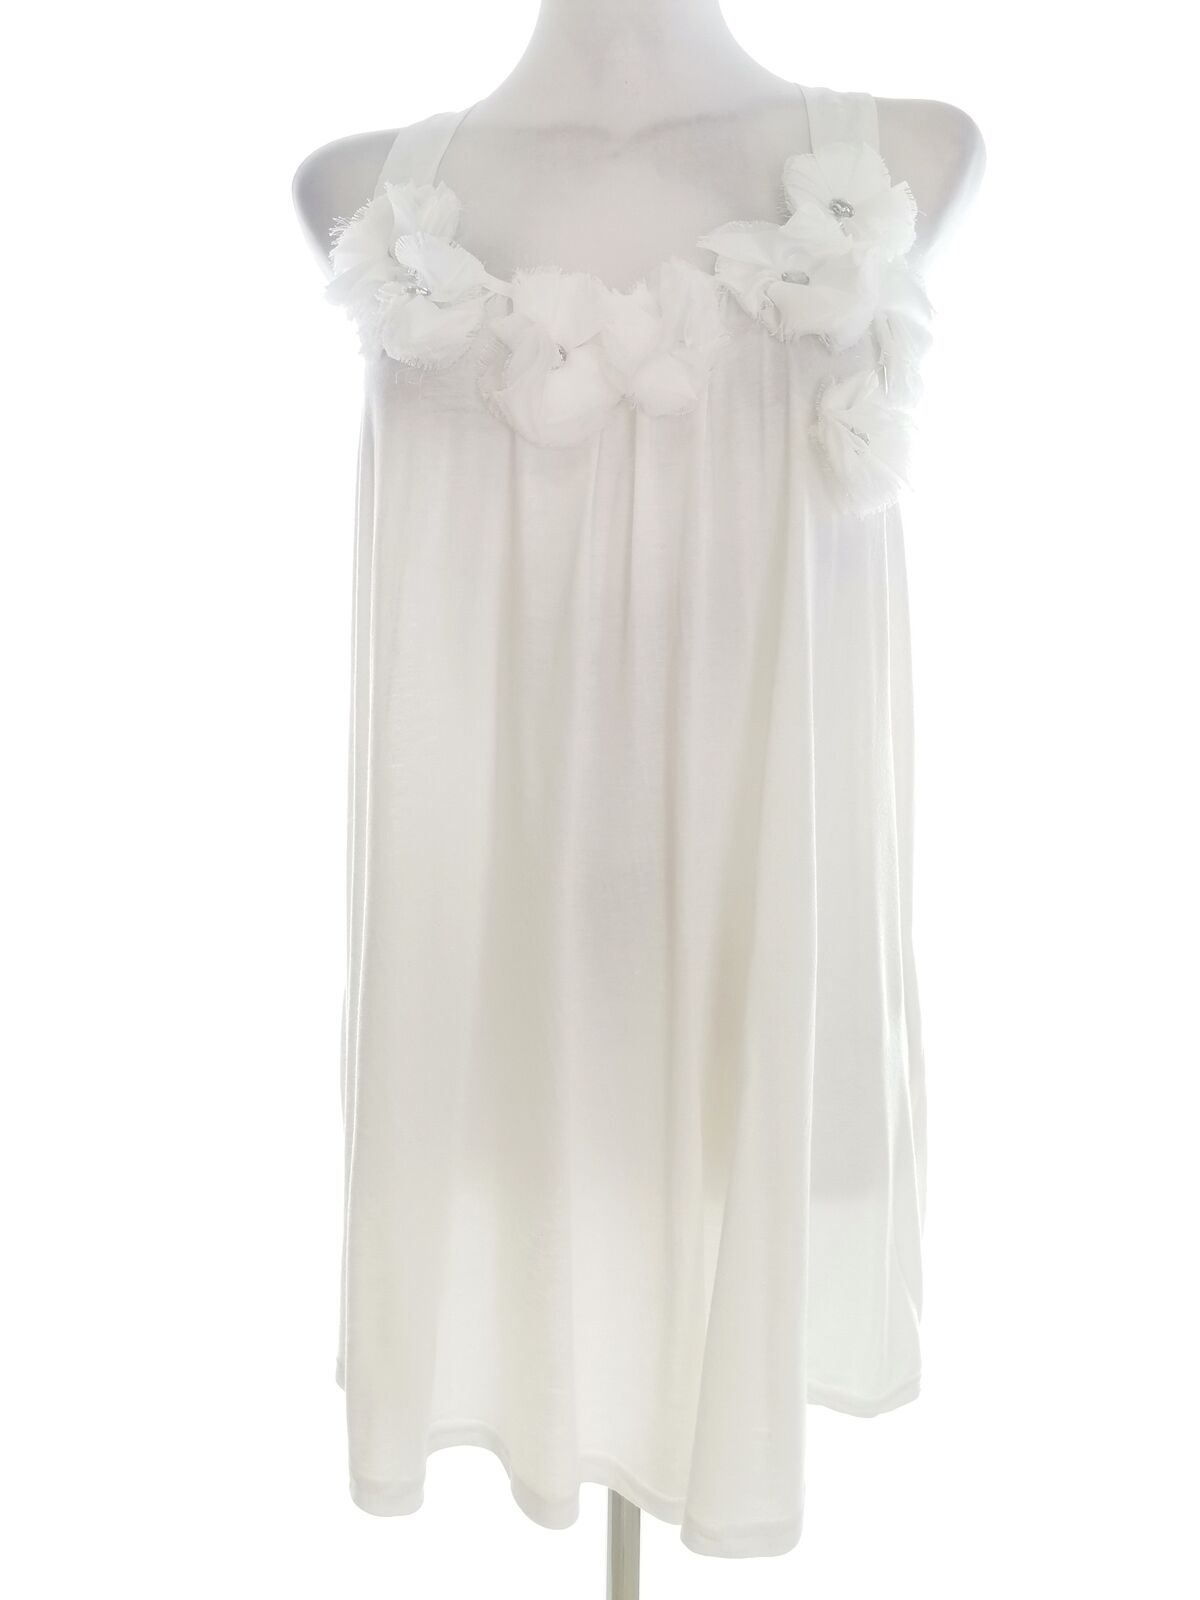 Image of Club L Gr. S/M Weiss Minikleid Kleid Ärmellos Perlen Asymmetrisch Baumwolle U-Bo